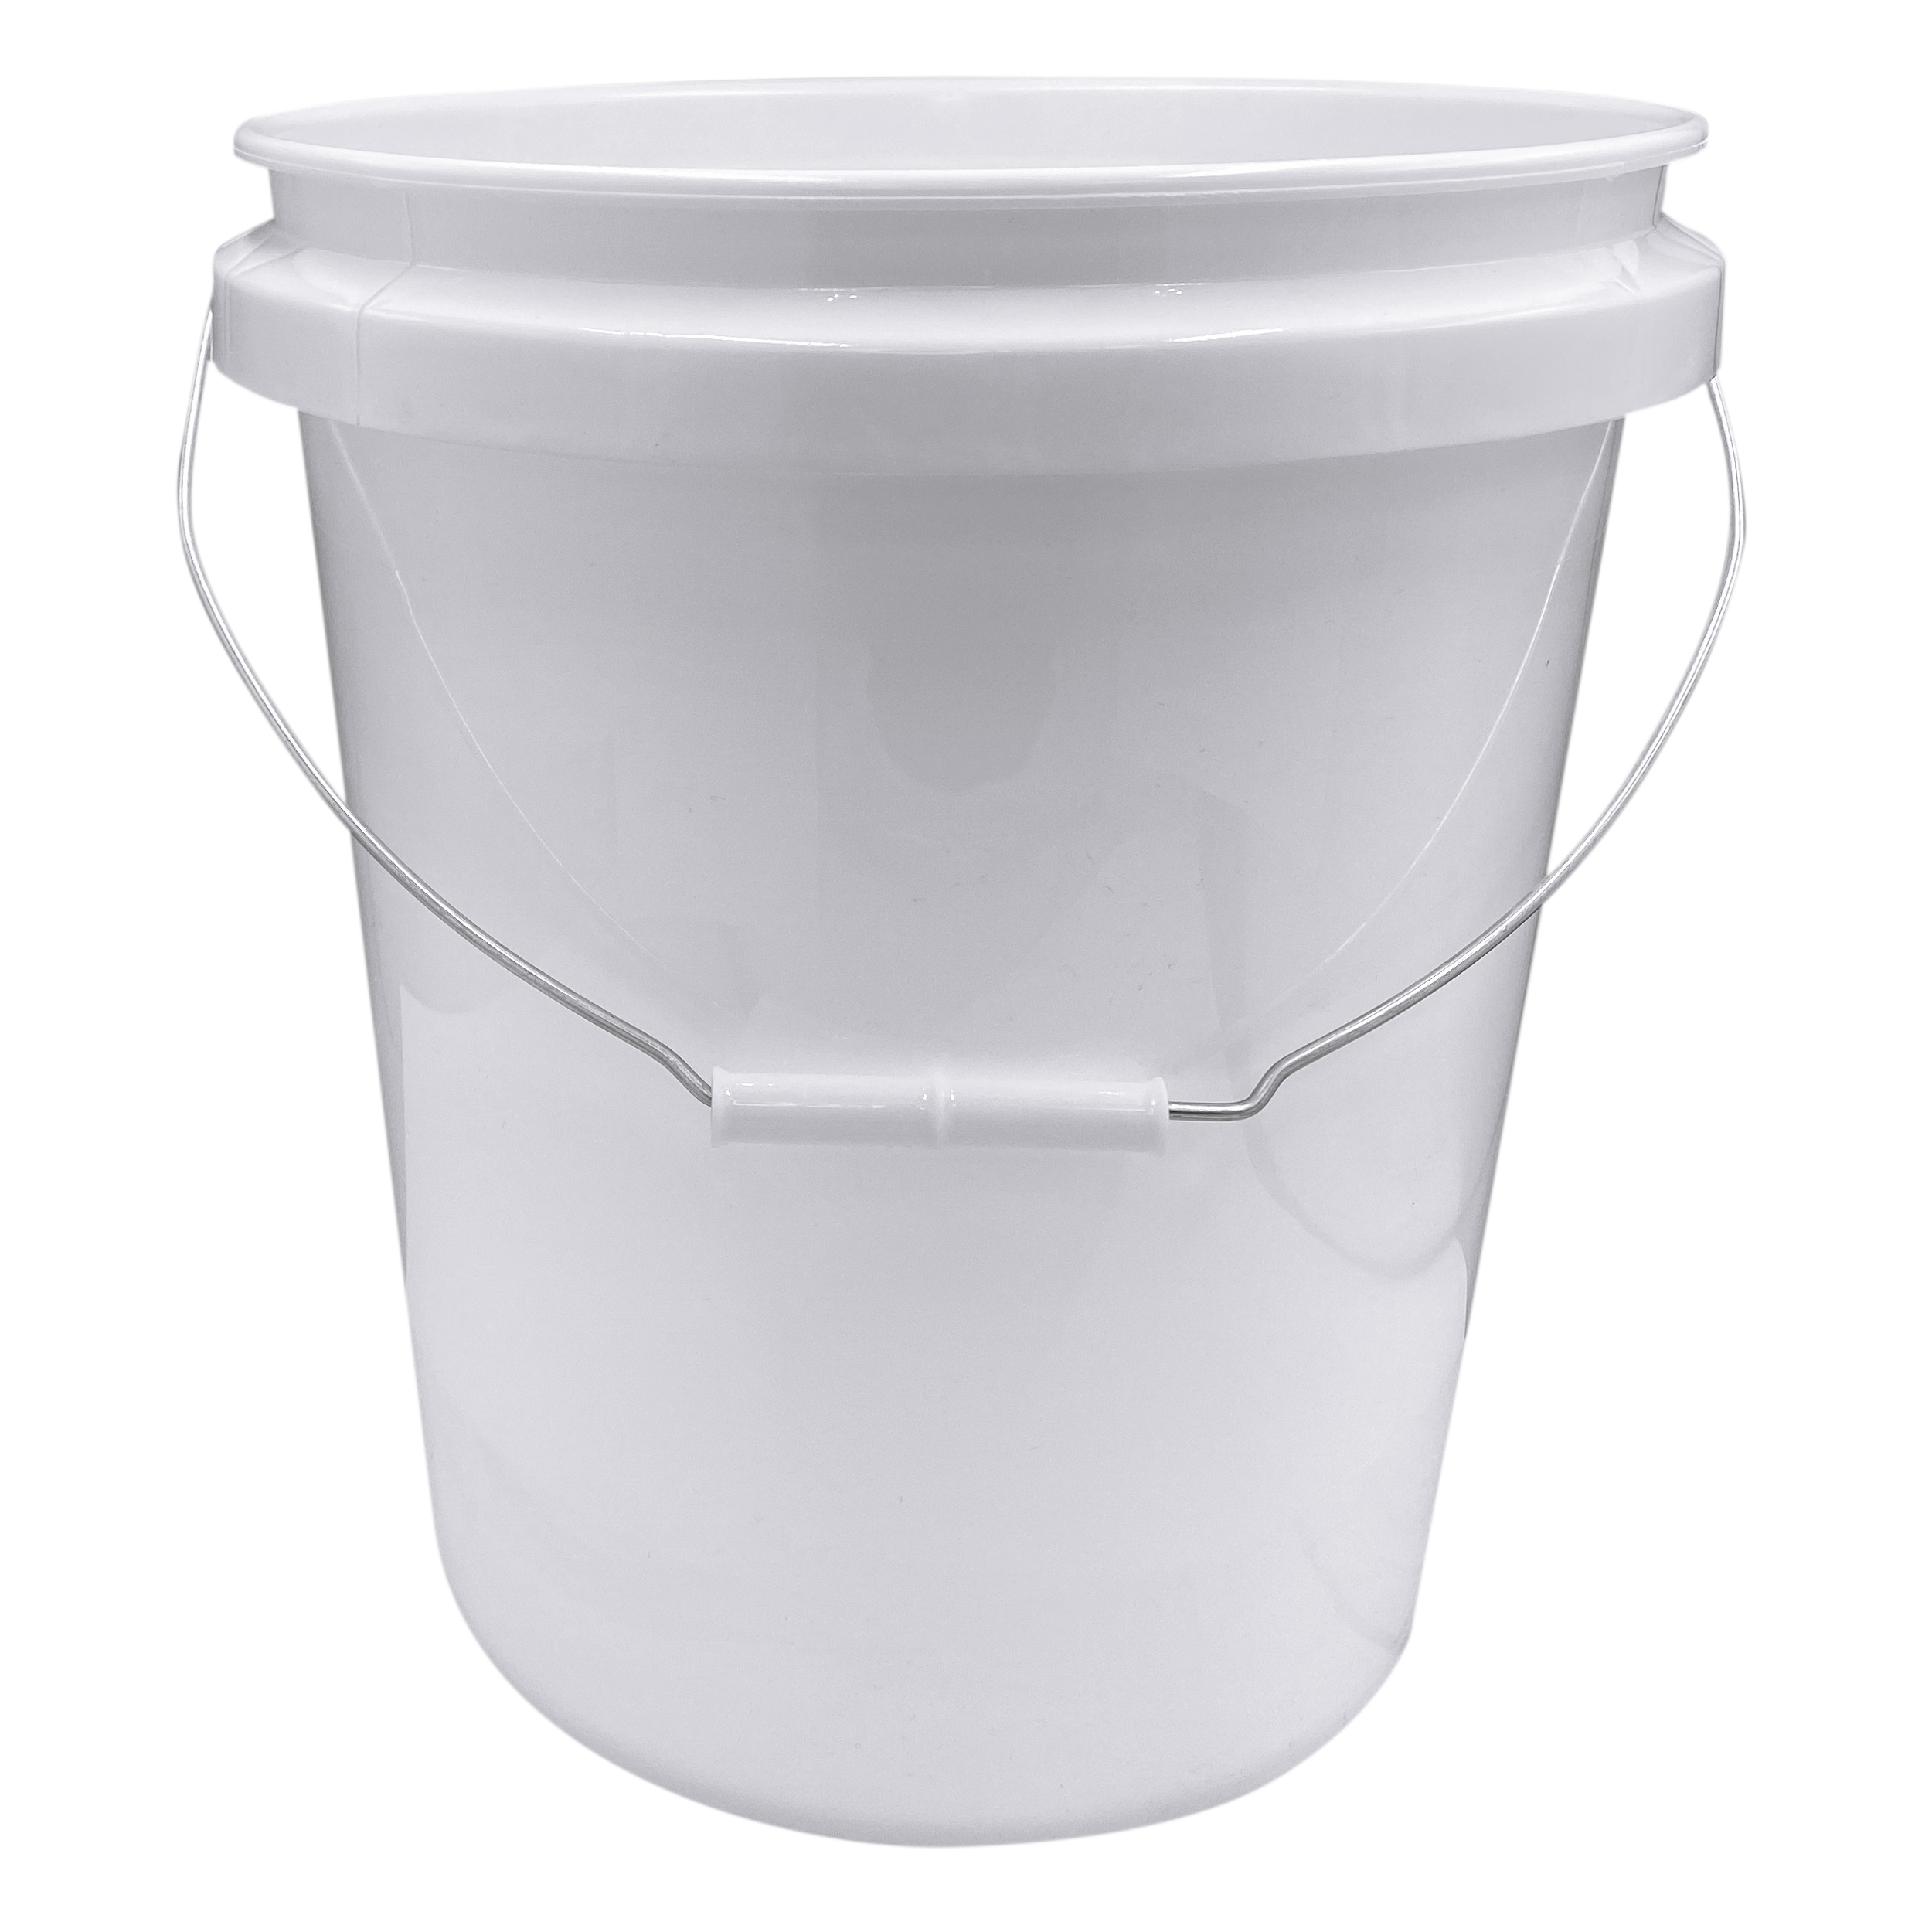 Encore Plastics Corp. 5 Gallon Plastic Pail/ Bucket, White - image 2 of 7